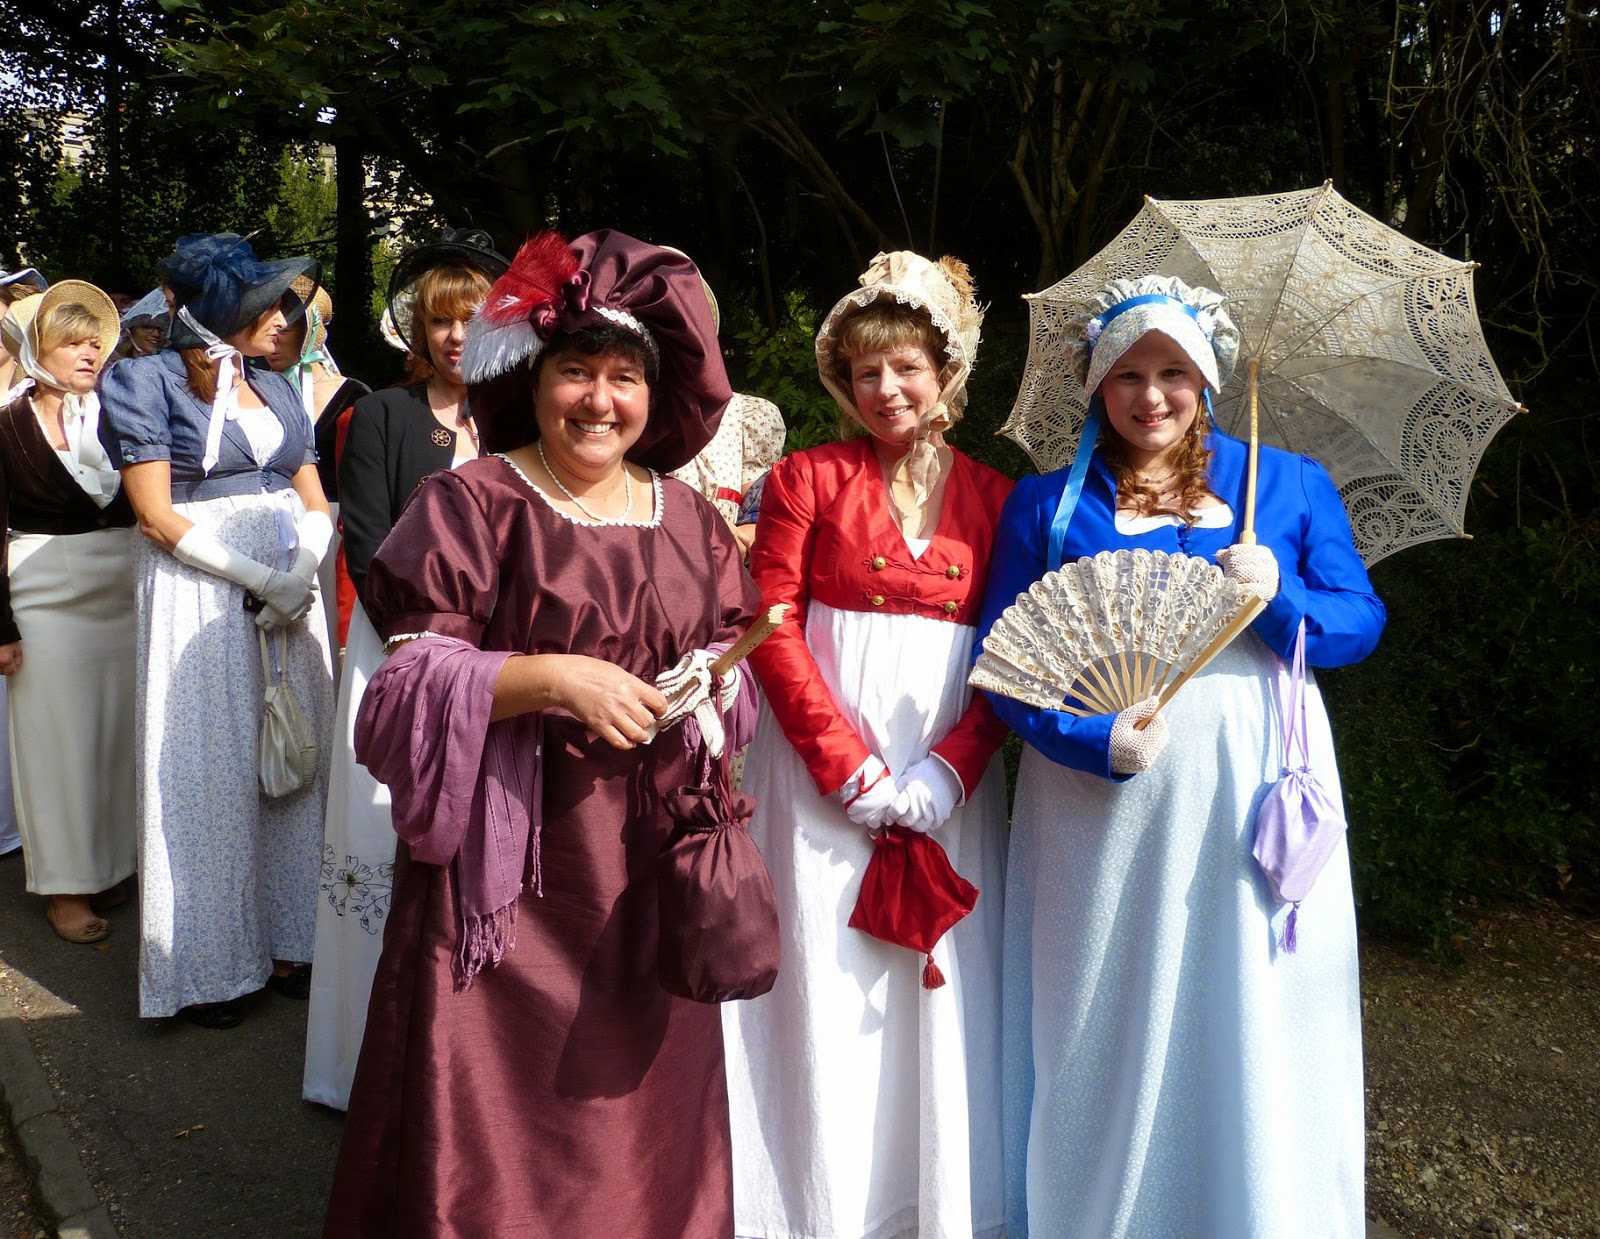 The Jane Austen Festival Promenade